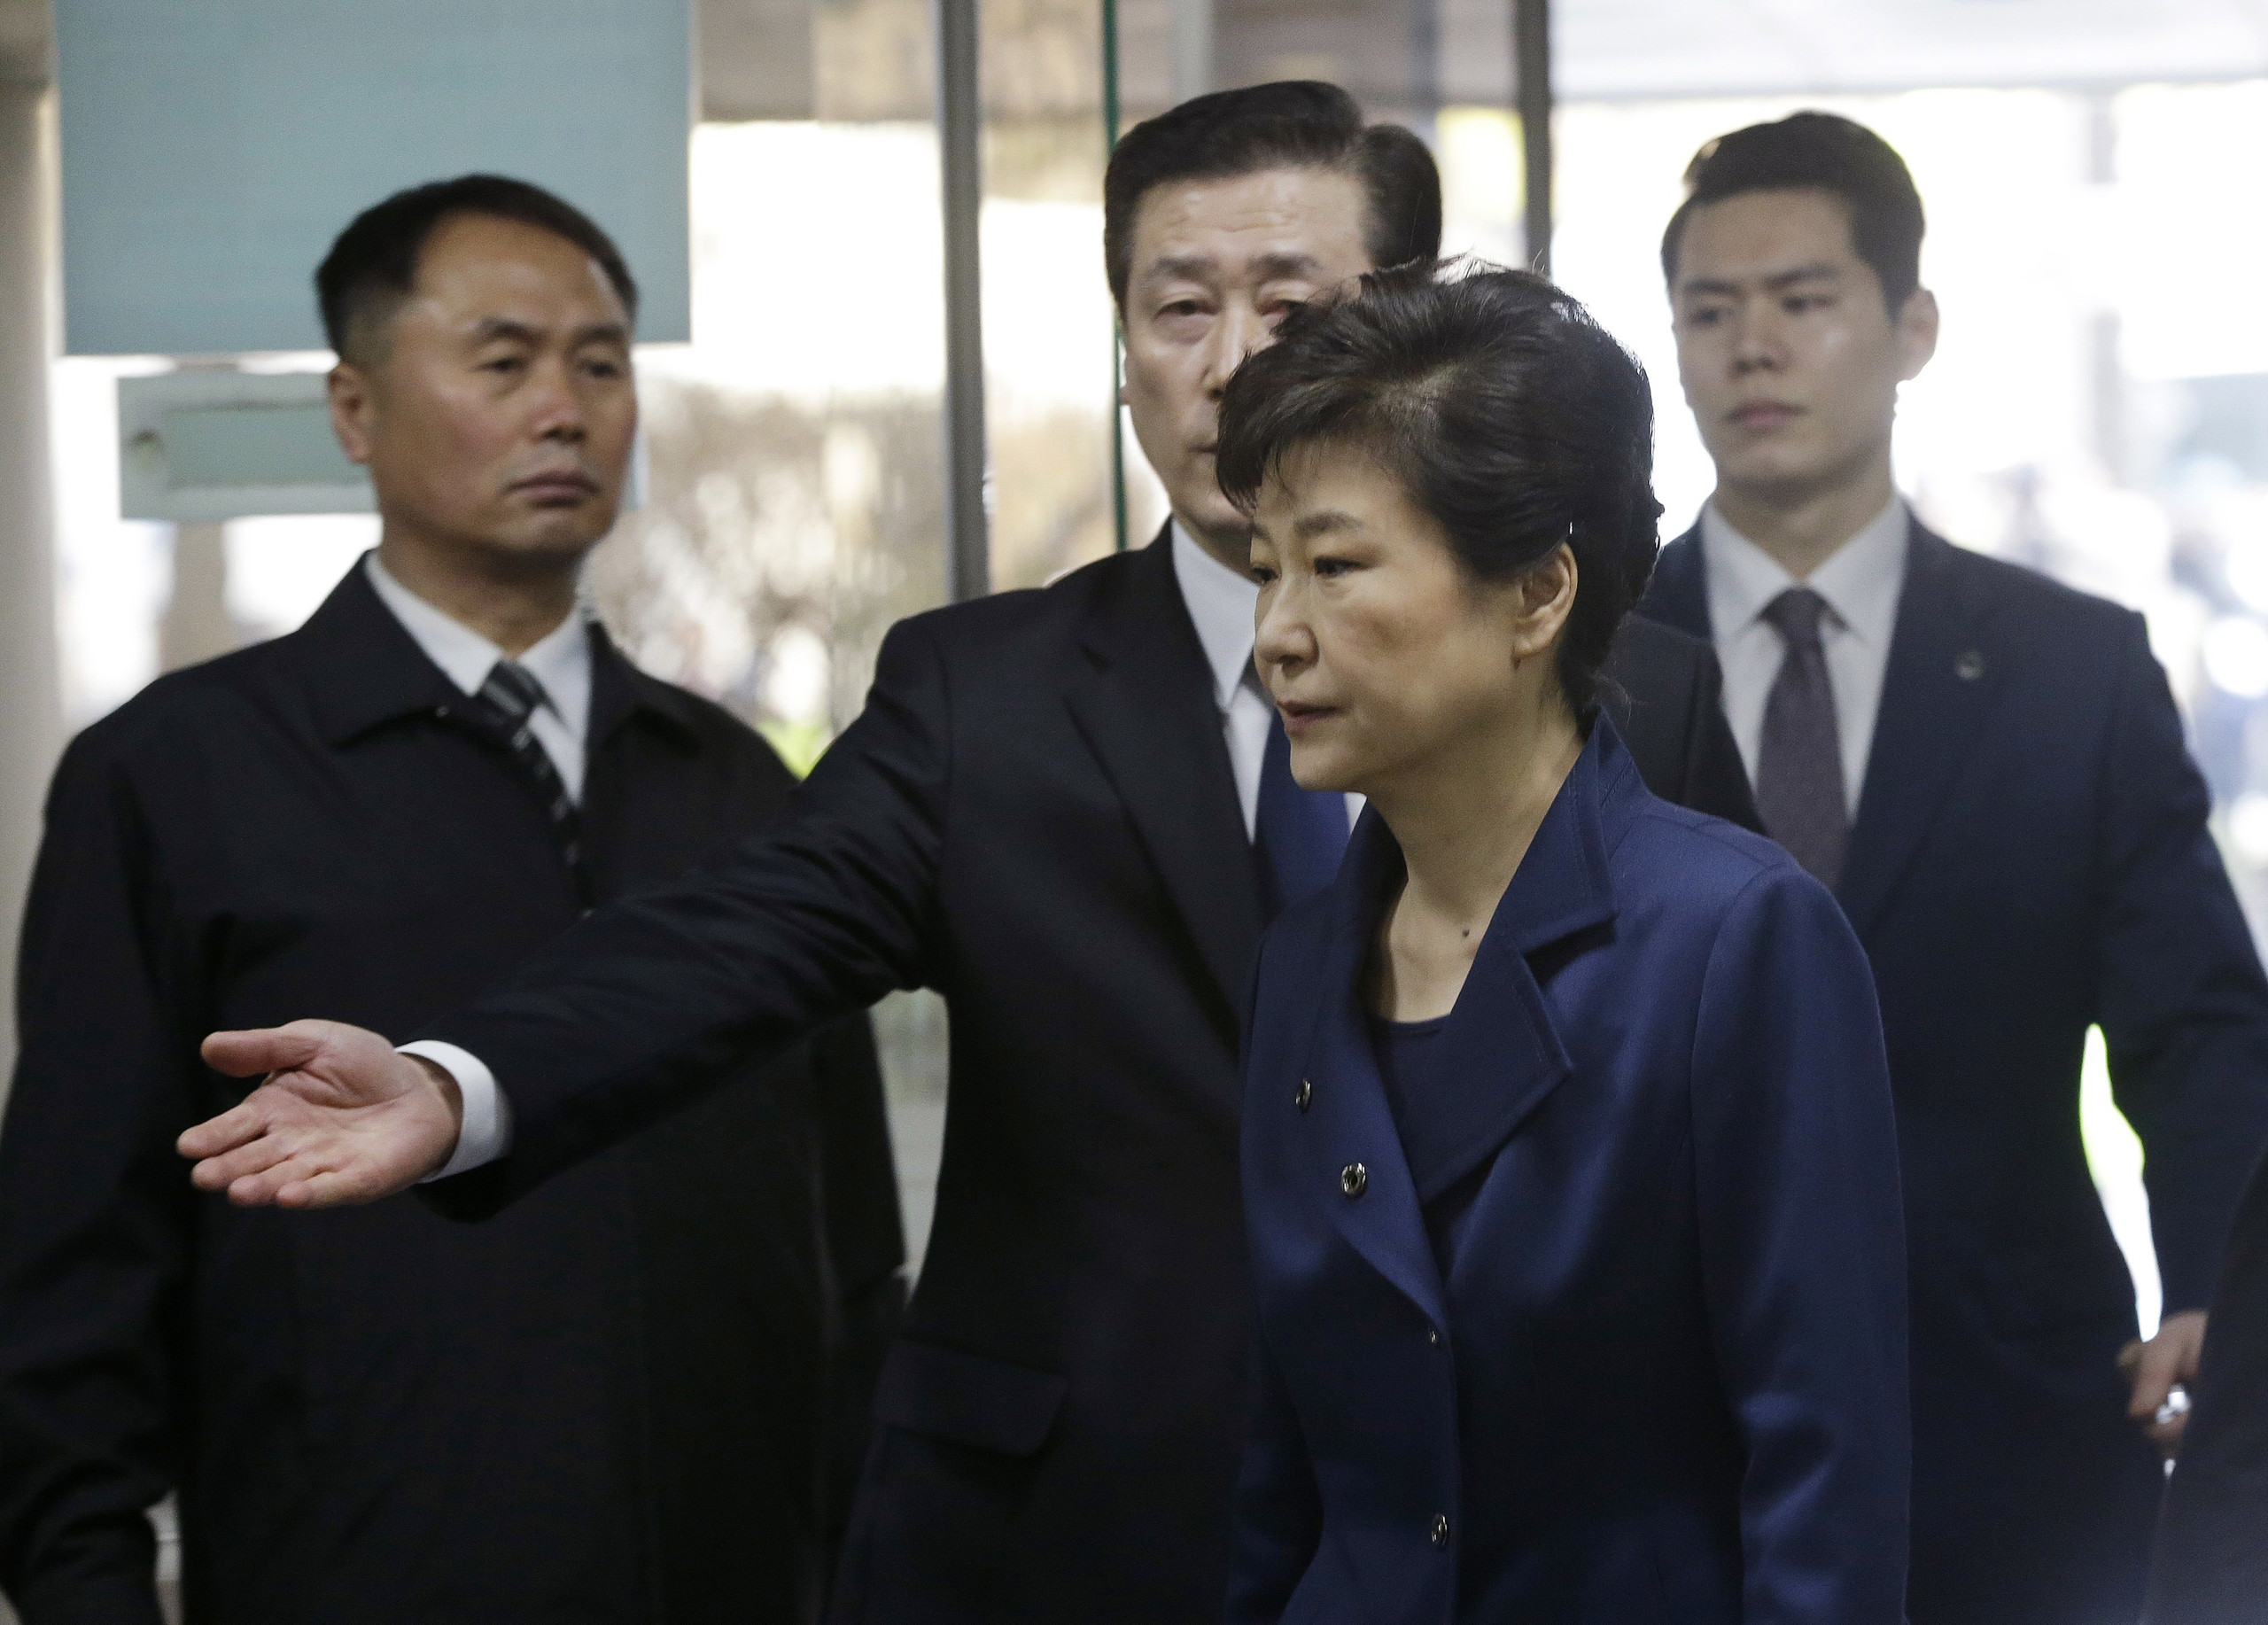 بالصور..  ملامح رئيسة كوريا وهم يقودونها للسجن